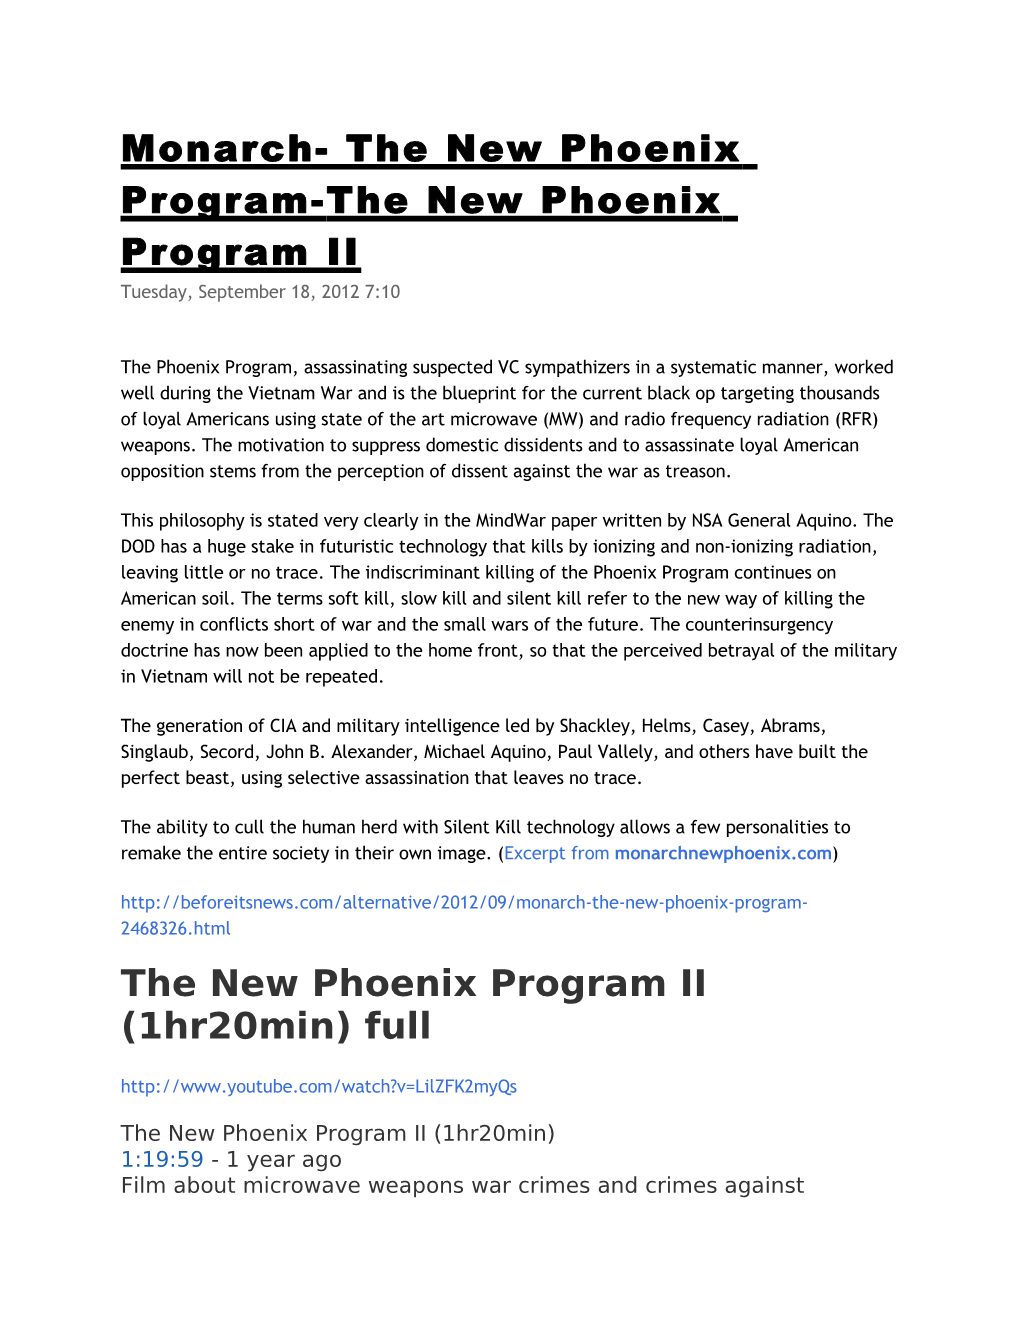 Monarch- the New Phoenix Program- the New Phoenix Program II Tuesday, September 18, 2012 7:10